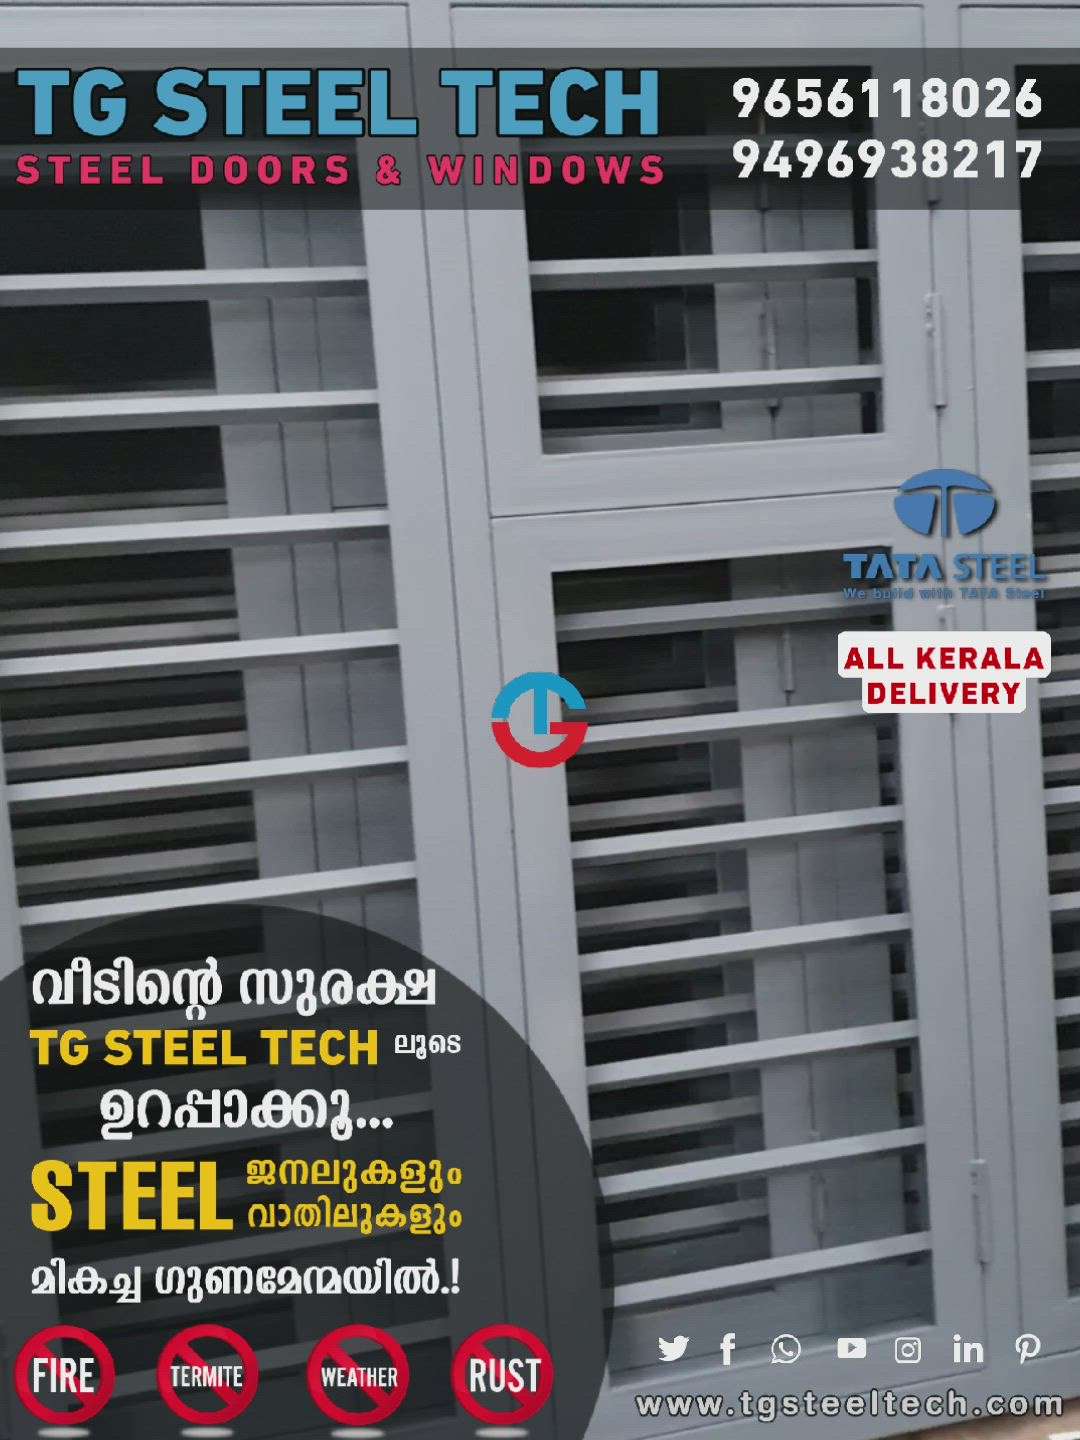 Tata gi steel windows and steel doors. All kerala delivery available
. TG STEEL TECH 
STEEL DOORS AND WINDOWS 
KOTTAKAL, MALAPPURAM 
9656118026
9496938217
8943918026 

#TataSteel #tata #steelwindows #windows #Doors #steel #kerala #katla #wood #frame #steeldoors #tgsteeltech #door #window #housing